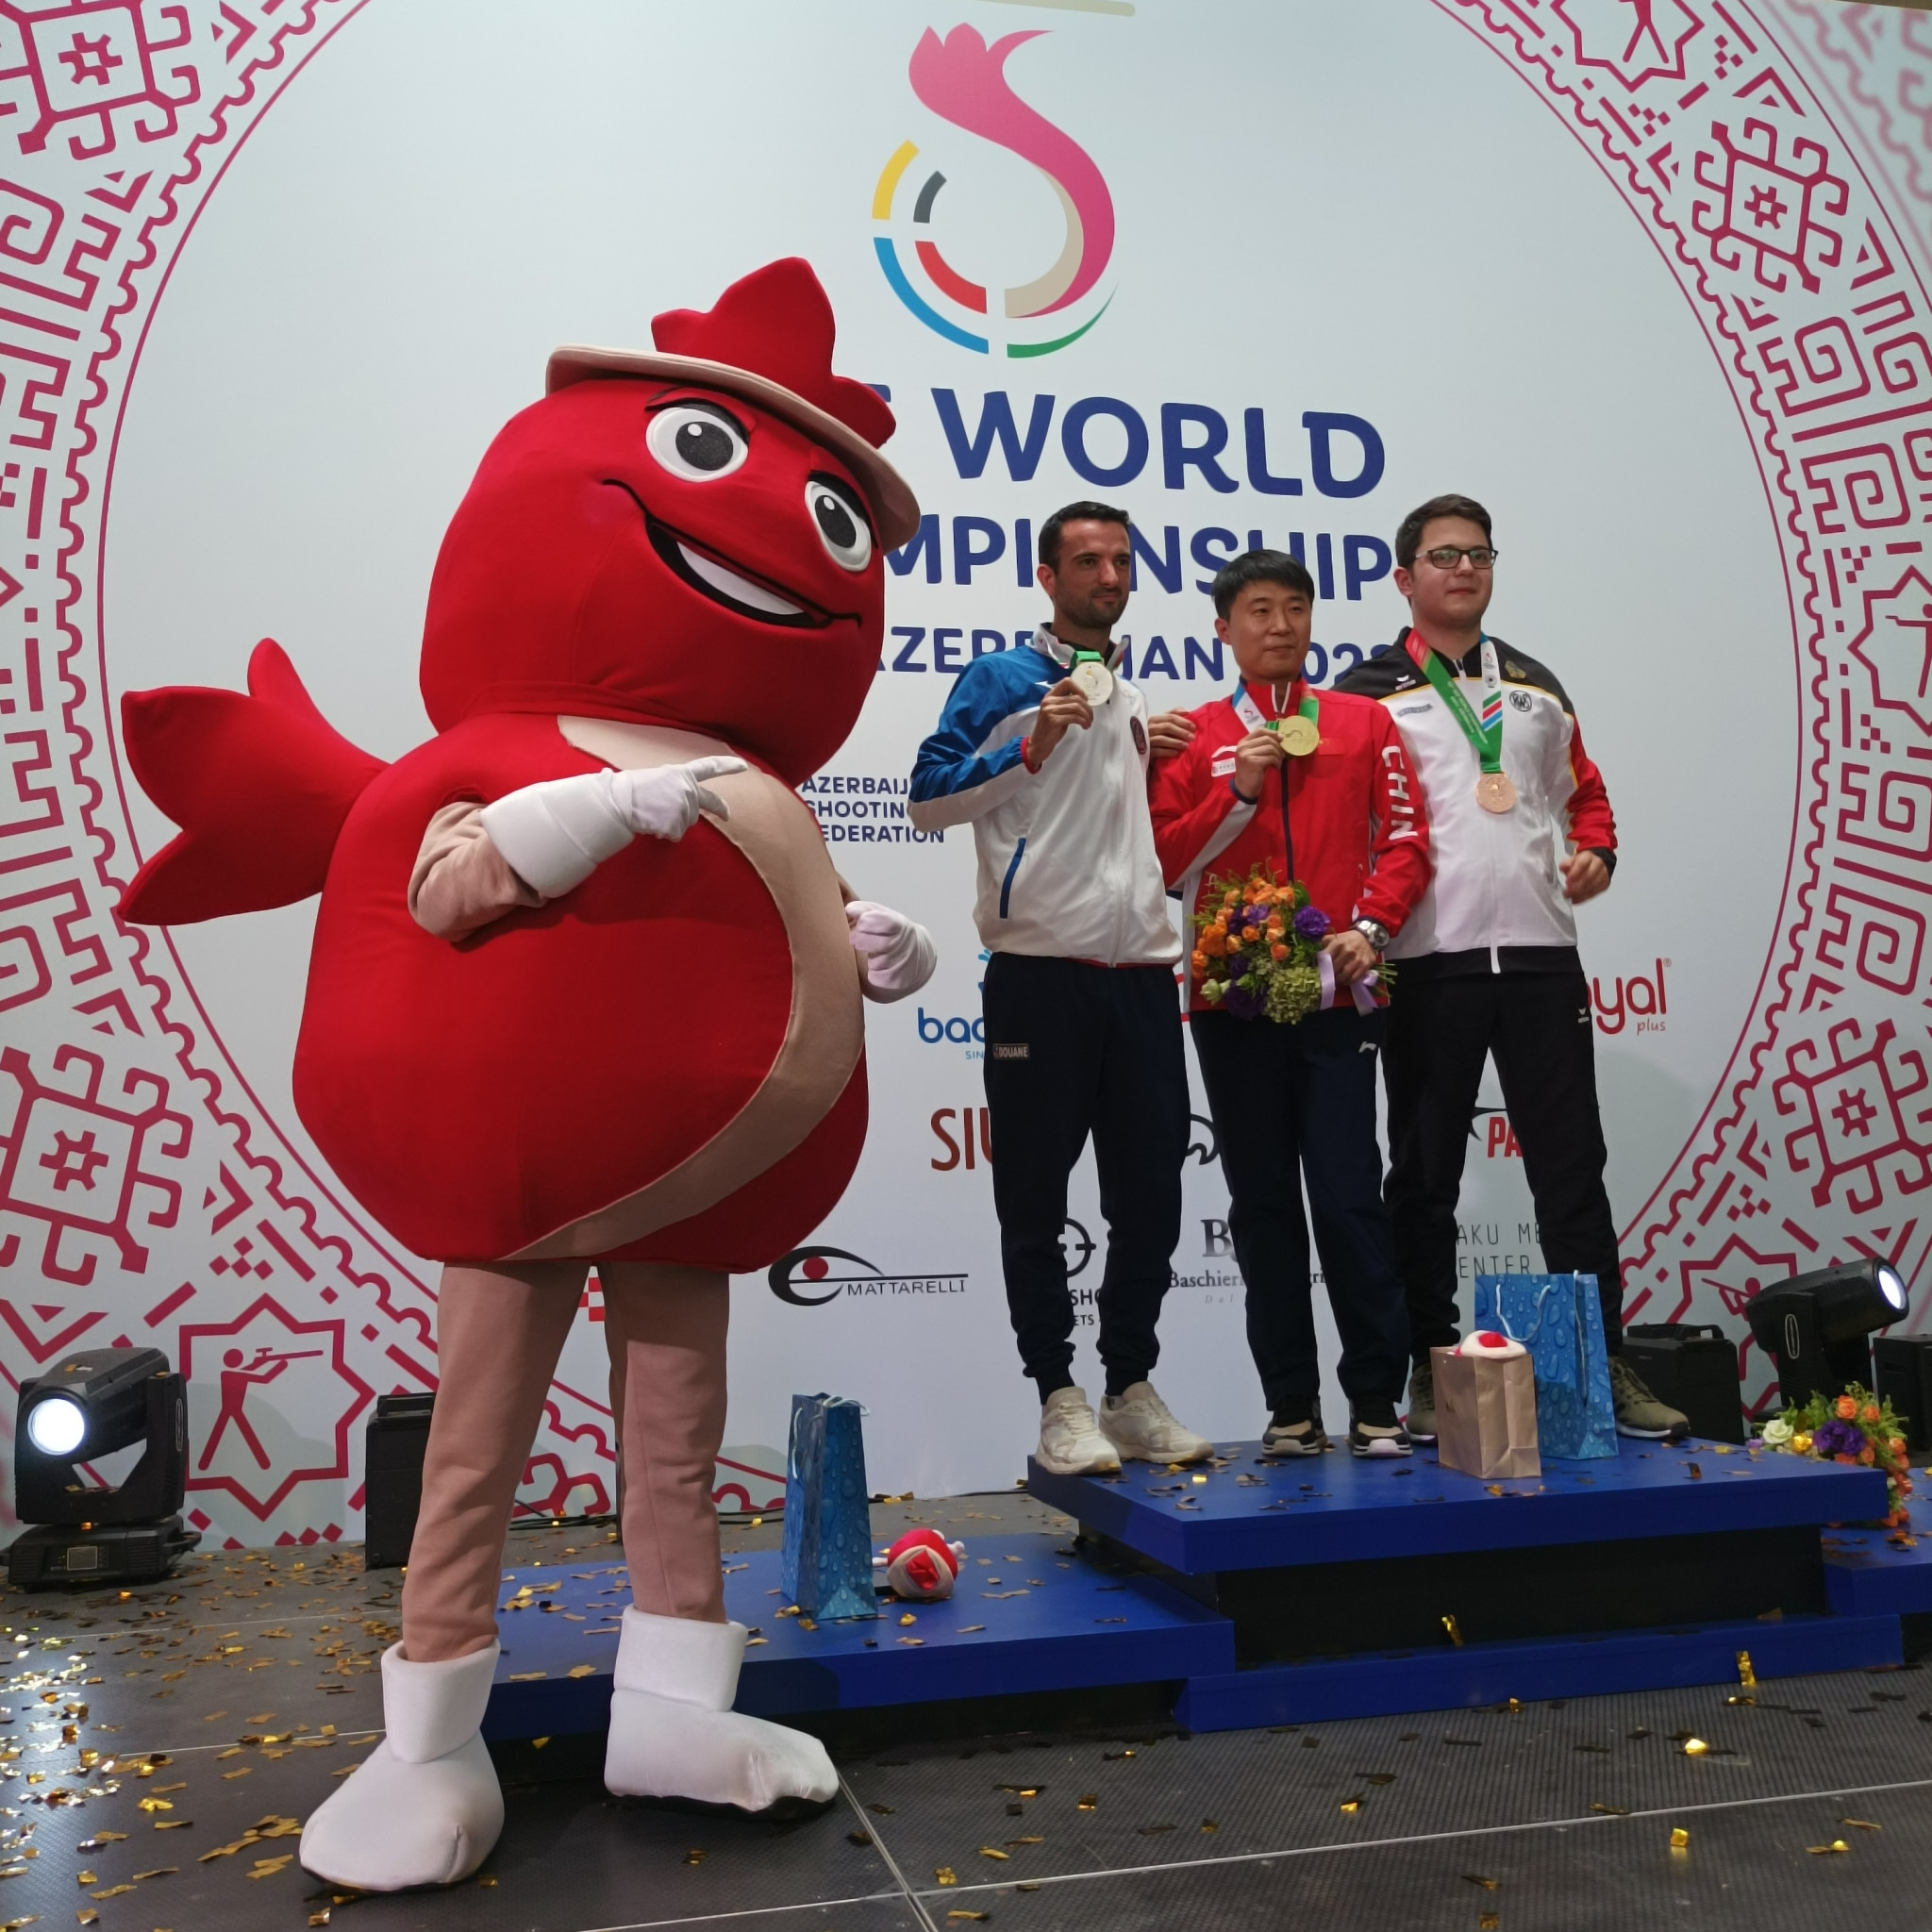 Li Yuehong's masterclass wins men's 25 metre pistol title at ISSF World Championships